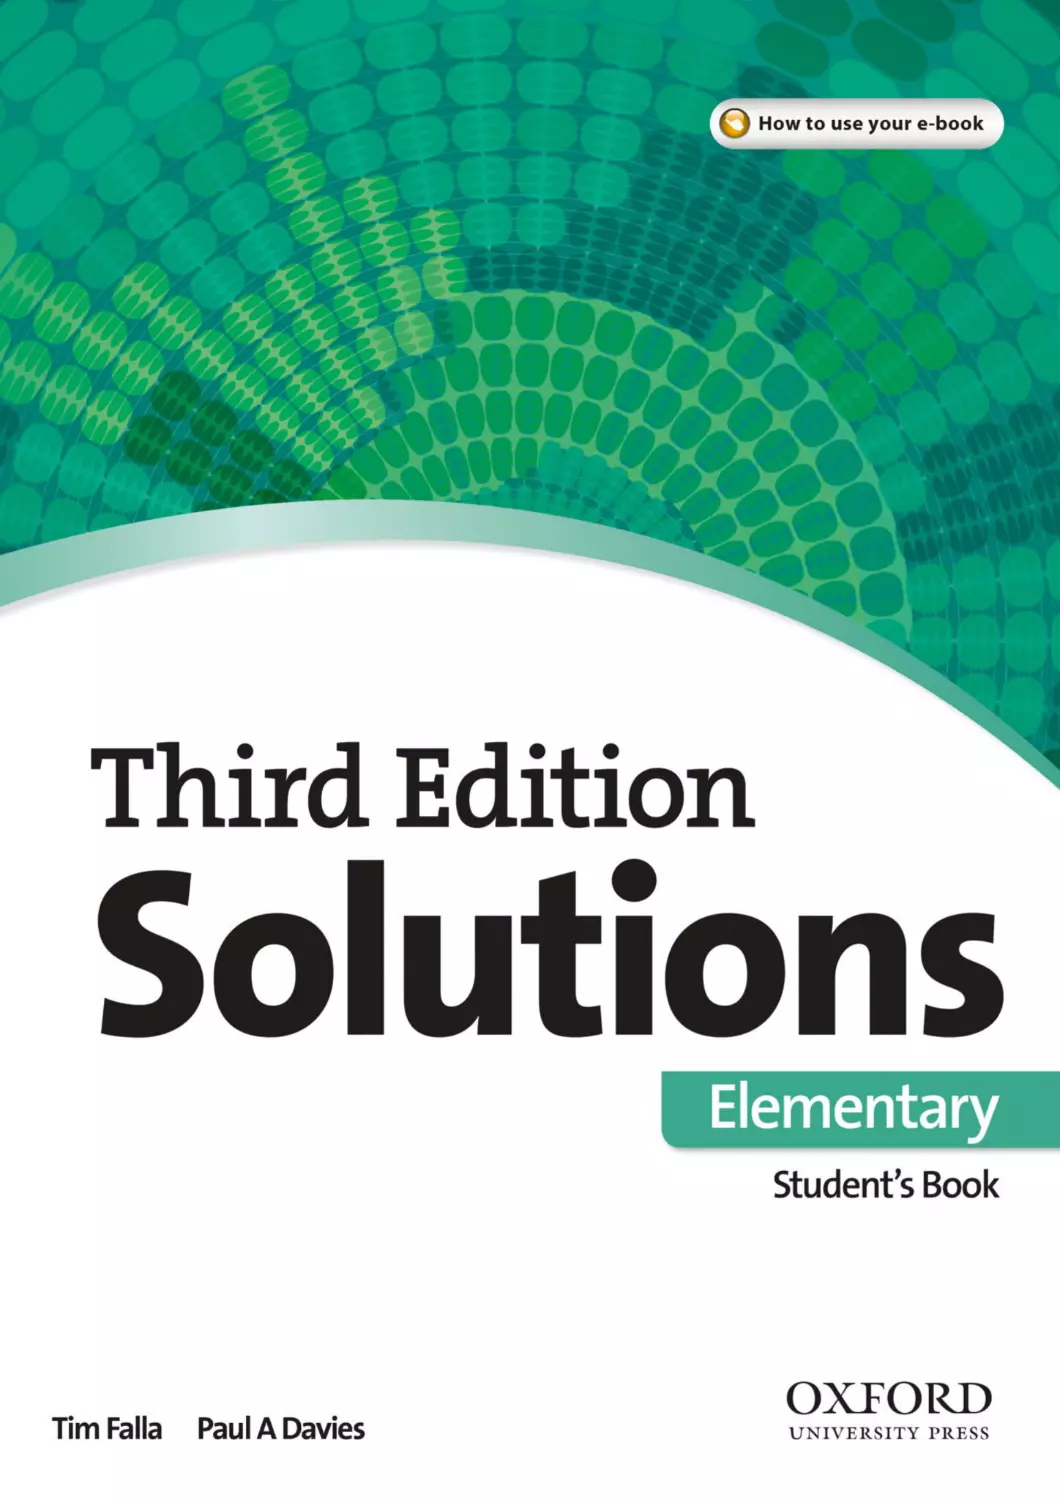 Solutions 3 edition elementary books. Solutions Elementary 3rd Edition. Солюшнс элементари 3 издание. Solutions Elementary 3rd Edition Workbook. Учебник third Edition solutions Elementary.